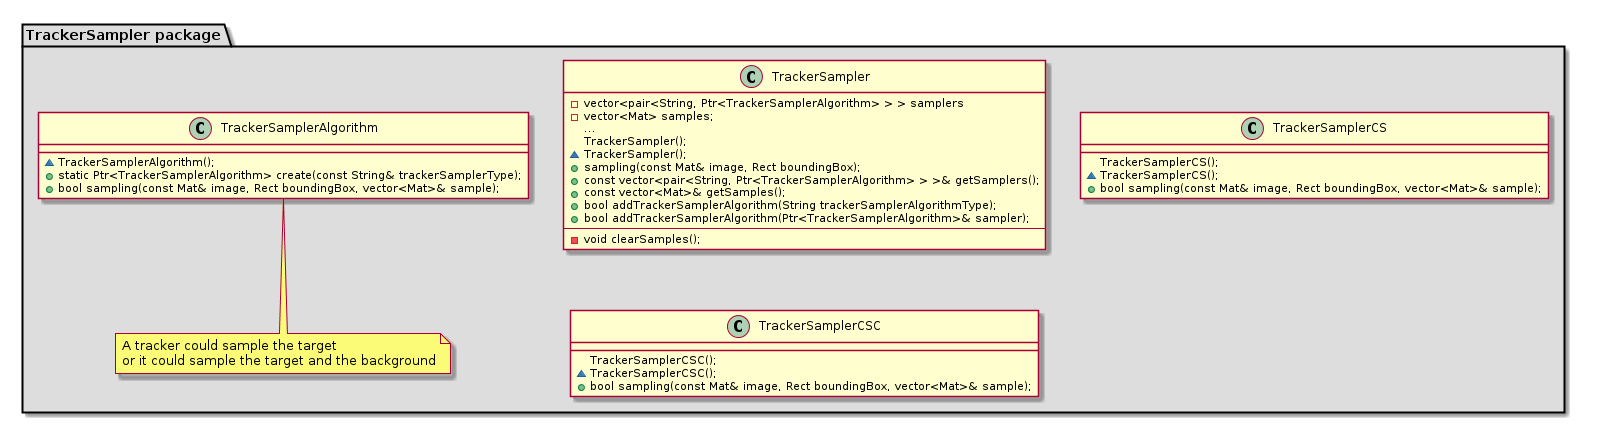 ..@startuml
package "TrackerSampler package" #DDDDDD {

class TrackerSampler{
  -vector<pair<String, Ptr<TrackerSamplerAlgorithm> > > samplers
  -vector<Mat> samples;
  ...
  TrackerSampler();
  ~TrackerSampler();
  +sampling(const Mat& image, Rect boundingBox);
  +const vector<pair<String, Ptr<TrackerSamplerAlgorithm> > >& getSamplers();
  +const vector<Mat>& getSamples();
  +bool addTrackerSamplerAlgorithm(String trackerSamplerAlgorithmType);
  +bool addTrackerSamplerAlgorithm(Ptr<TrackerSamplerAlgorithm>& sampler);
  ---
  -void clearSamples();
}

class TrackerSamplerAlgorithm{
  ~TrackerSamplerAlgorithm();
  +static Ptr<TrackerSamplerAlgorithm> create(const String& trackerSamplerType);
  +bool sampling(const Mat& image, Rect boundingBox, vector<Mat>& sample);
}
note bottom: A tracker could sample the target\nor it could sample the target and the background


class TrackerSamplerCS{
  TrackerSamplerCS();
  ~TrackerSamplerCS();
  +bool sampling(const Mat& image, Rect boundingBox, vector<Mat>& sample);
}
class TrackerSamplerCSC{
  TrackerSamplerCSC();
  ~TrackerSamplerCSC();
  +bool sampling(const Mat& image, Rect boundingBox, vector<Mat>& sample);
}


}
..@enduml